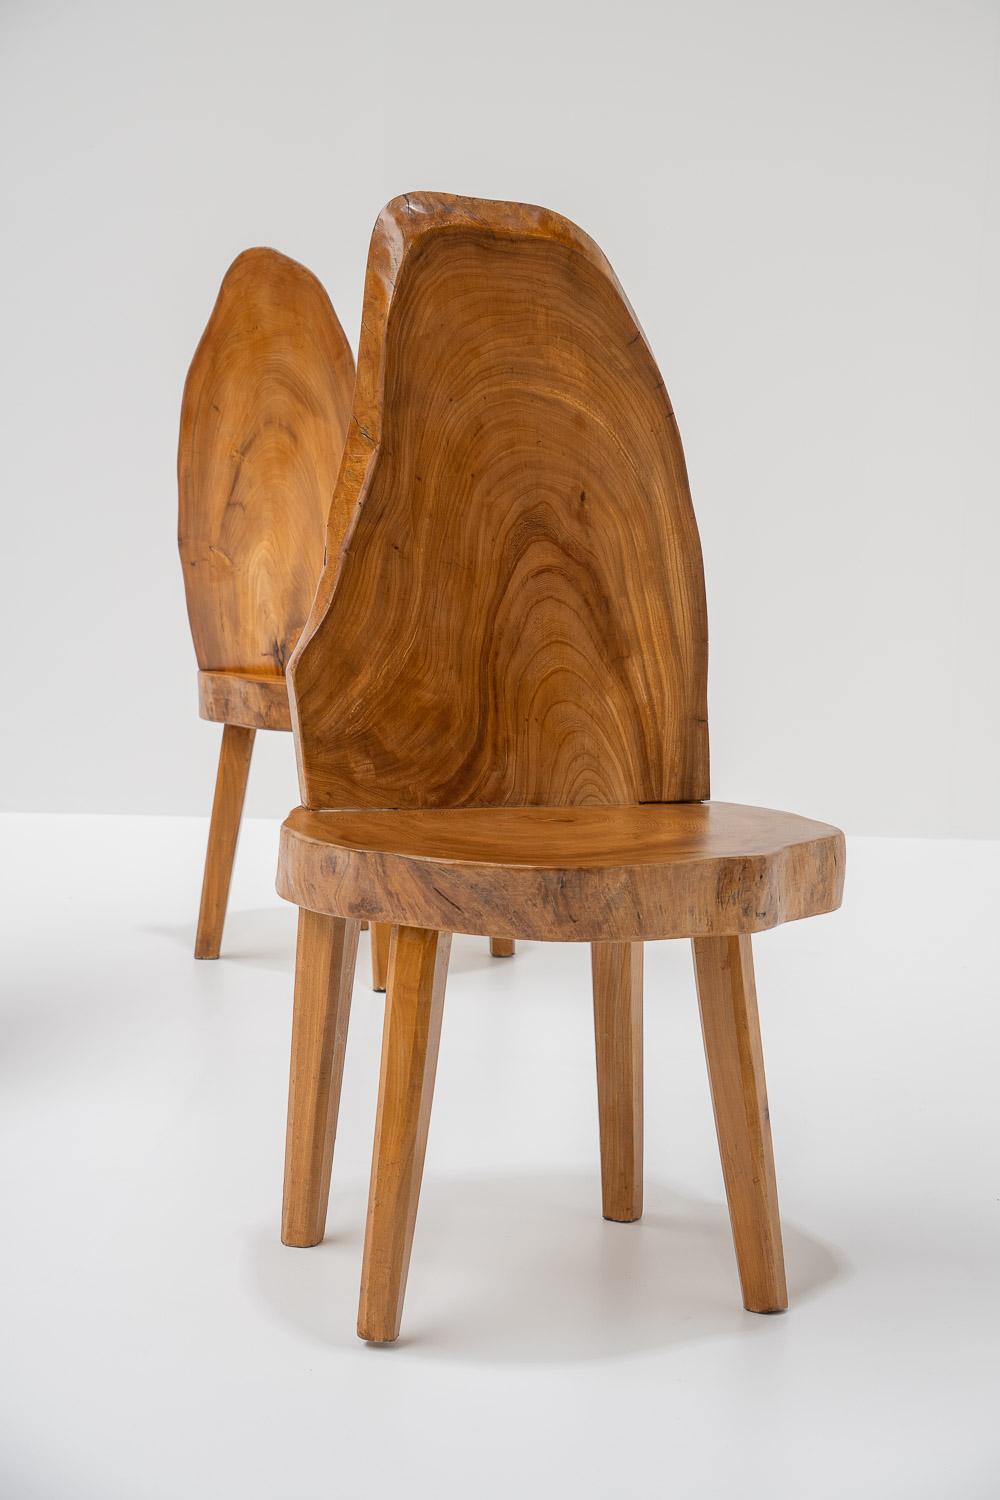 1980s wood furniture